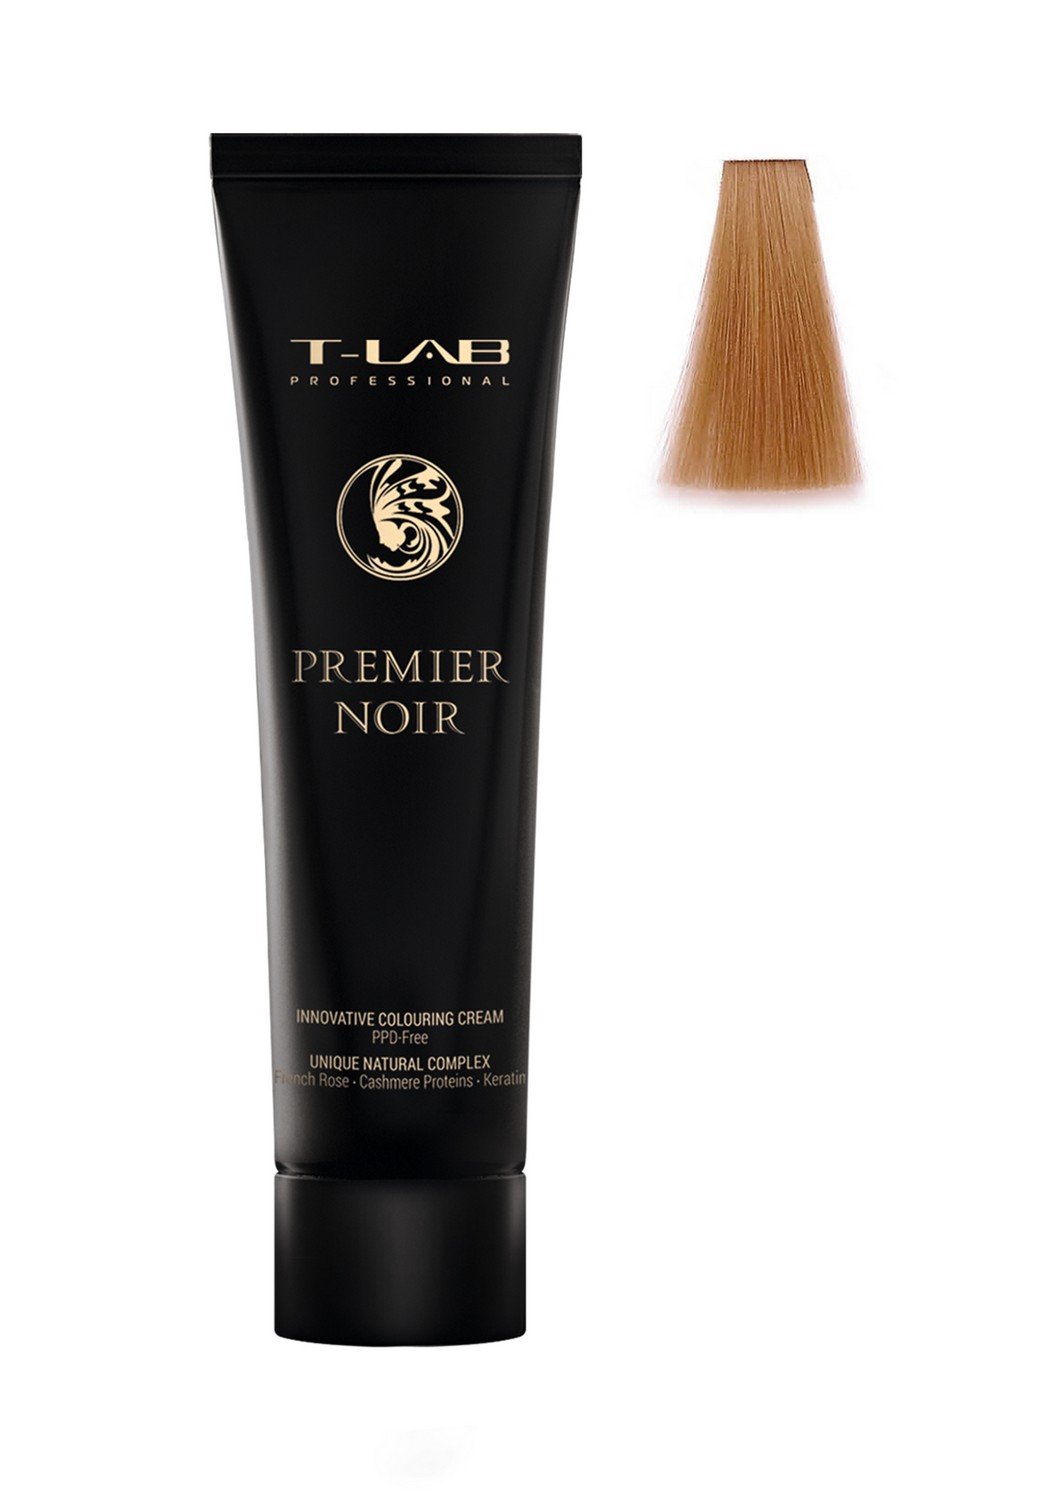 Крем-краска T-LAB Professional Premier Noir colouring cream, оттенок 10.42 (lightest copper iridescent blonde) - фото 2